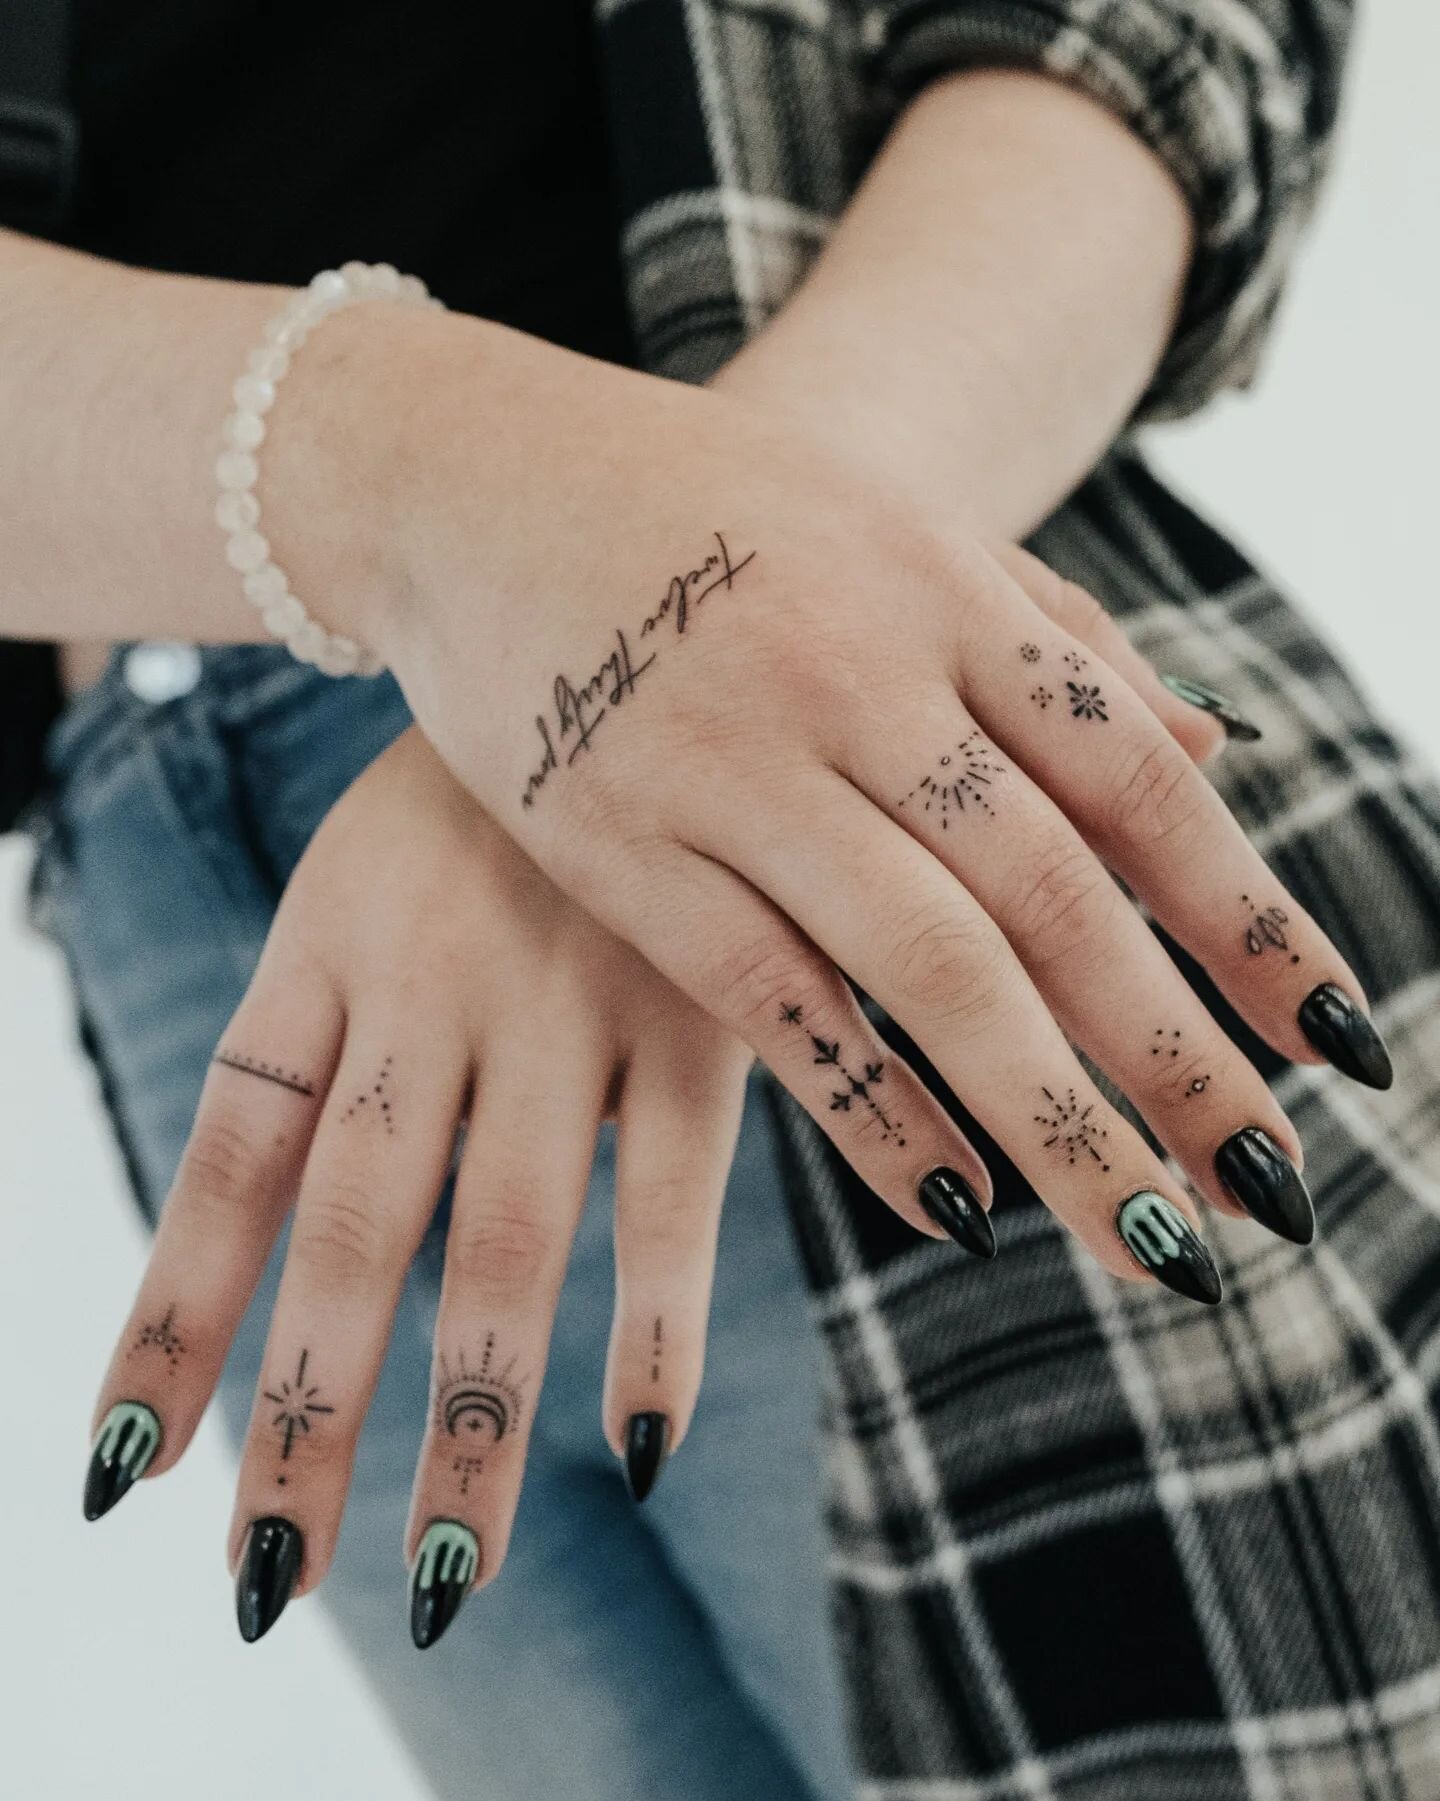 Hands *booking form in bio*
Thank you to this wonderful client for her trust 
.
.
.
.

.#tattoo #tattoos #ink #inked #art #tattooartist #tattooart #tattooed #tattoolife #tattooideas #love #artist #blackwork #instagood #tattoodesign #tatuagem #tattooi